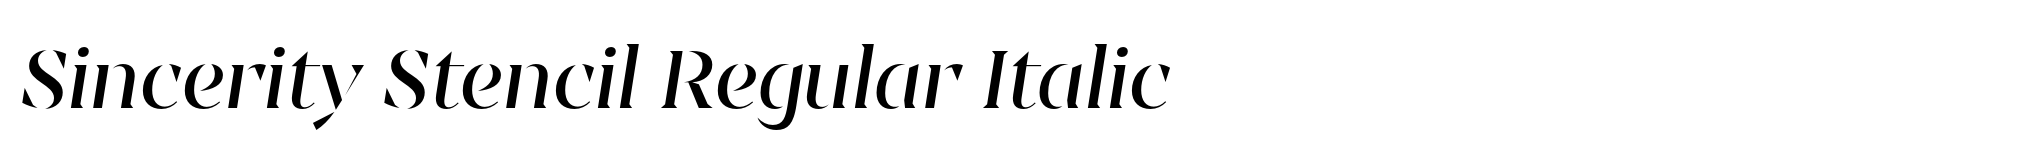 Sincerity Stencil Regular Italic image